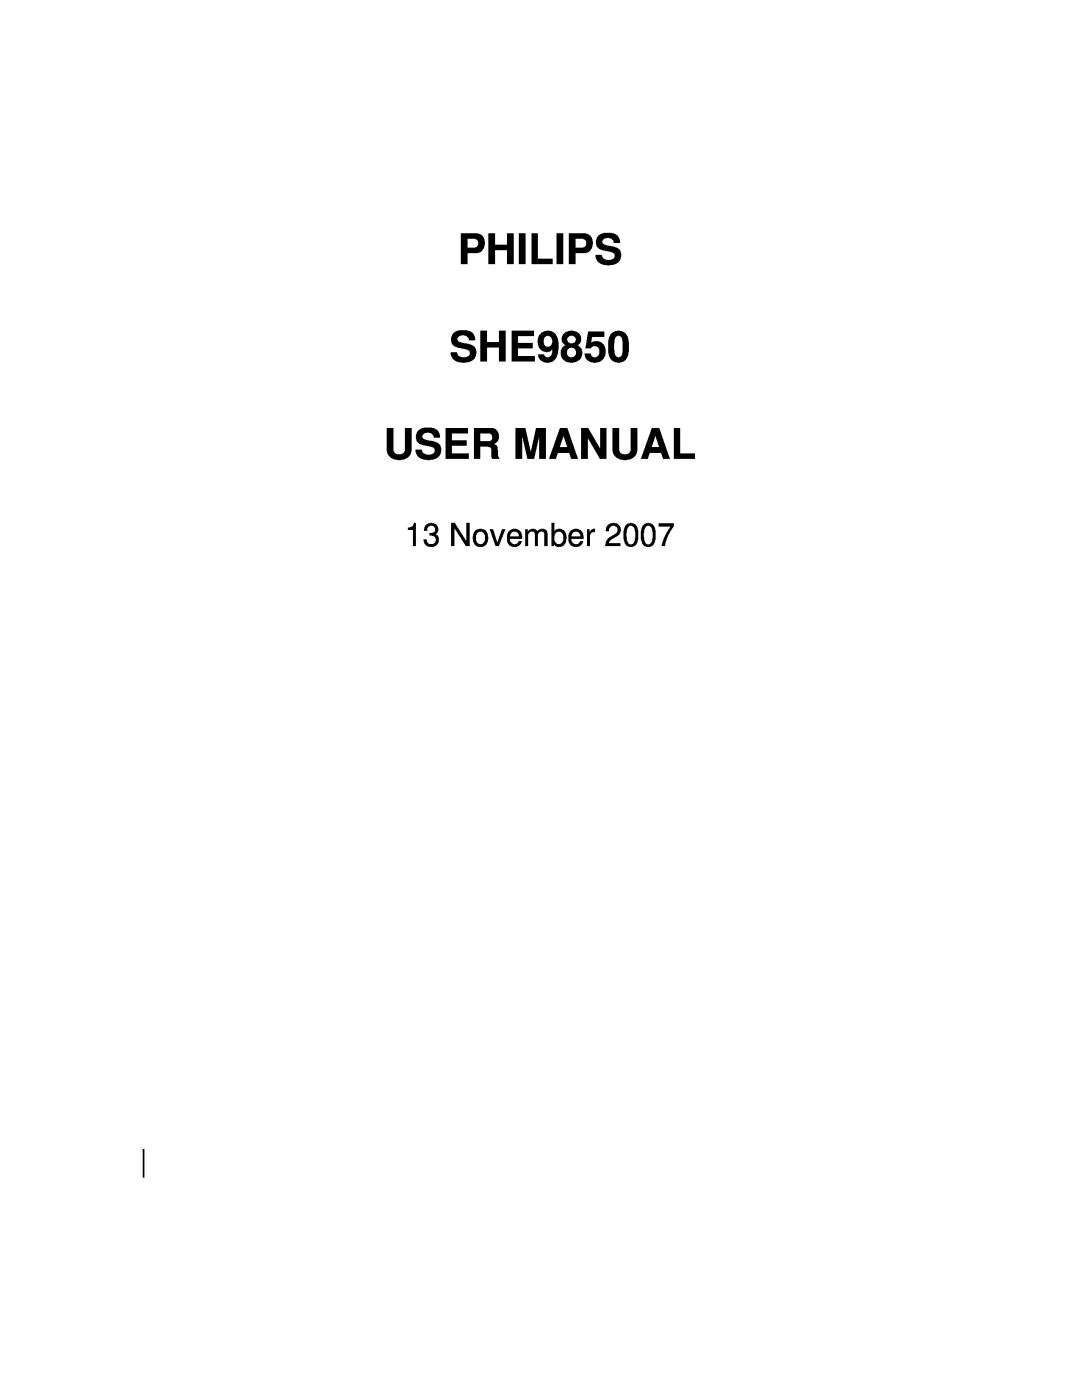 Philips SHE9850 user manual November 